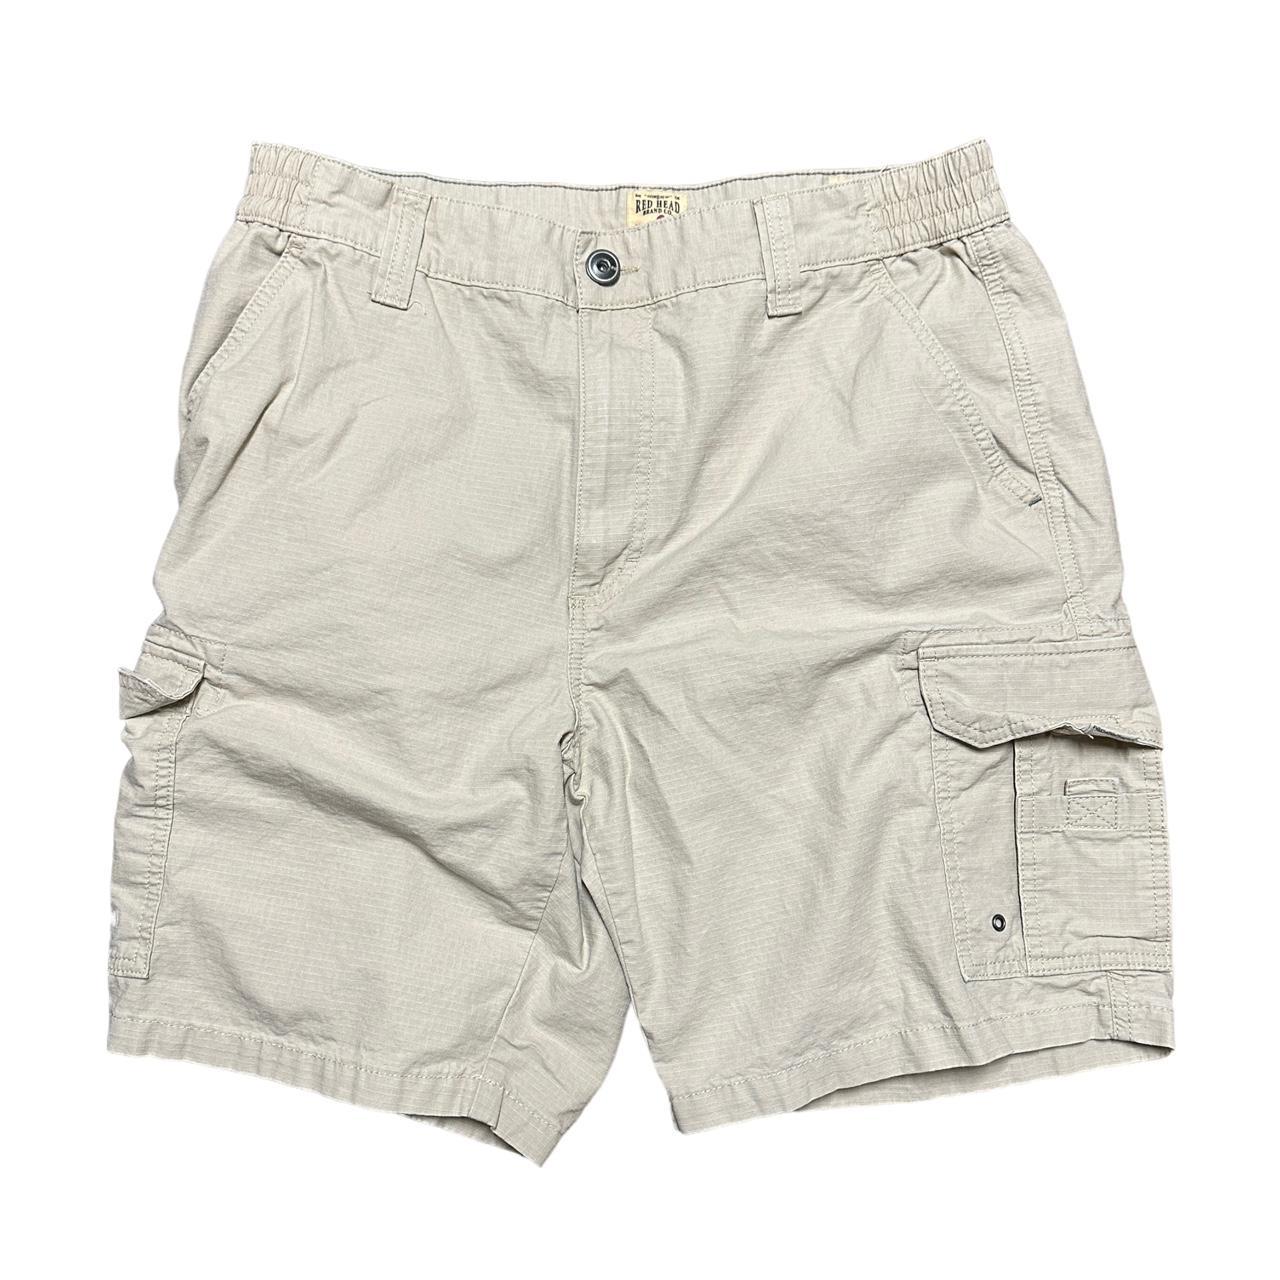 The Unbranded Brand Men's Khaki Shorts | Depop